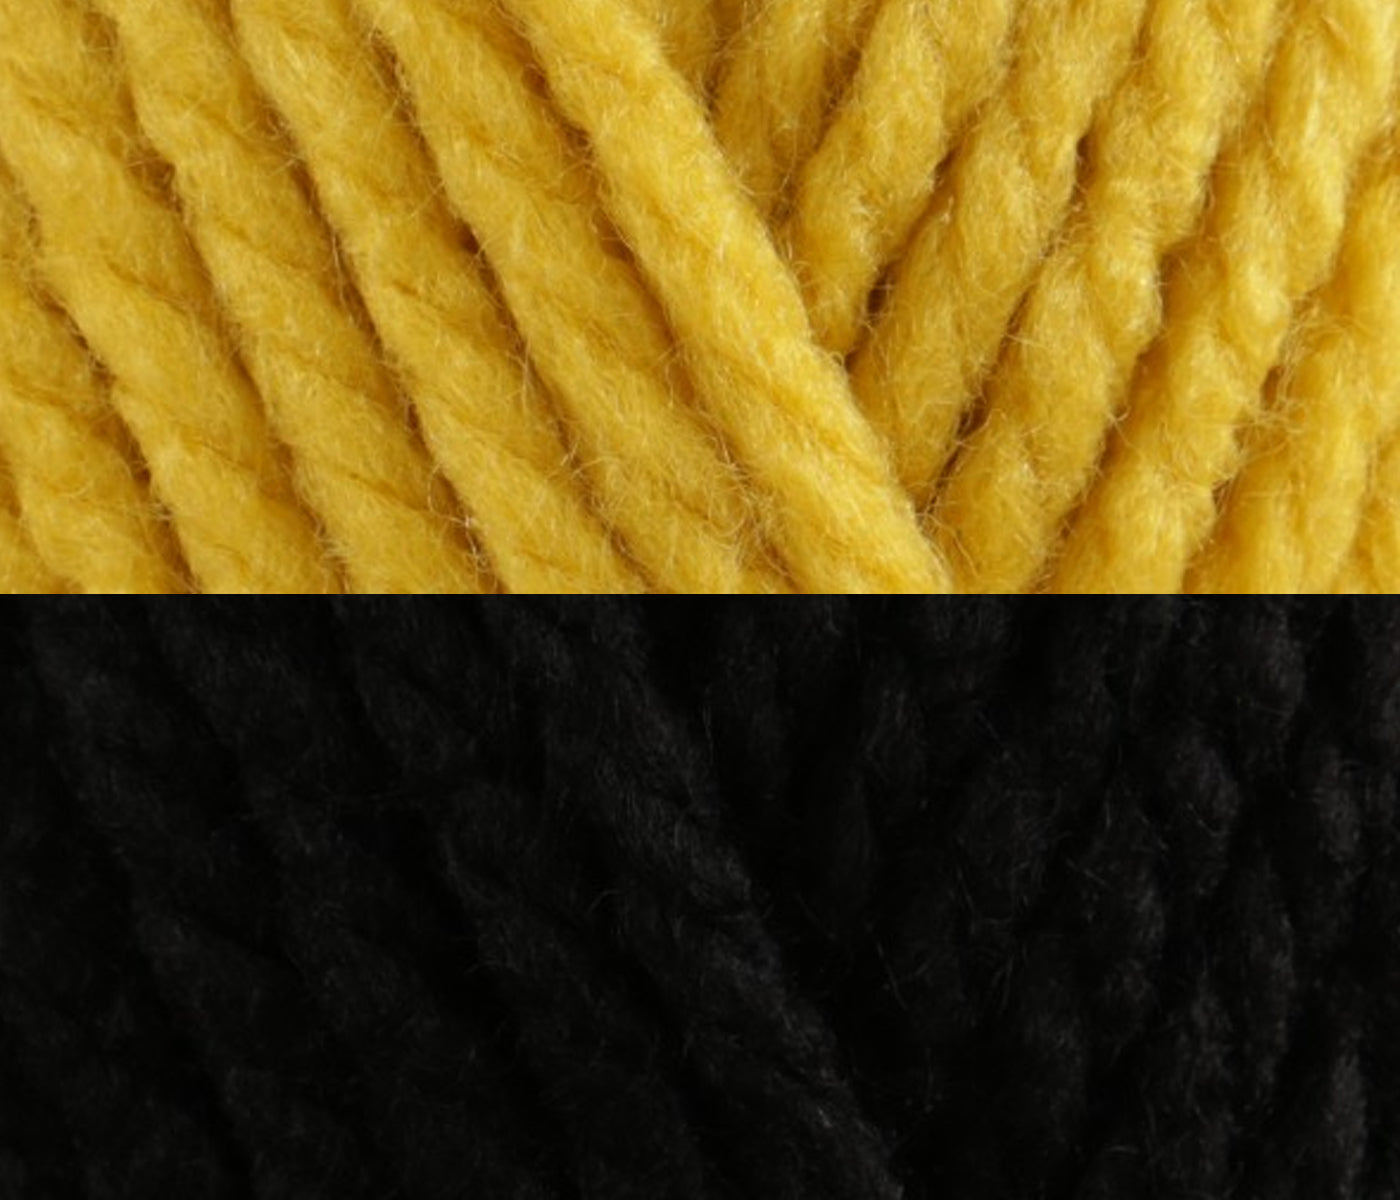 House Mittens | Knitting Kit